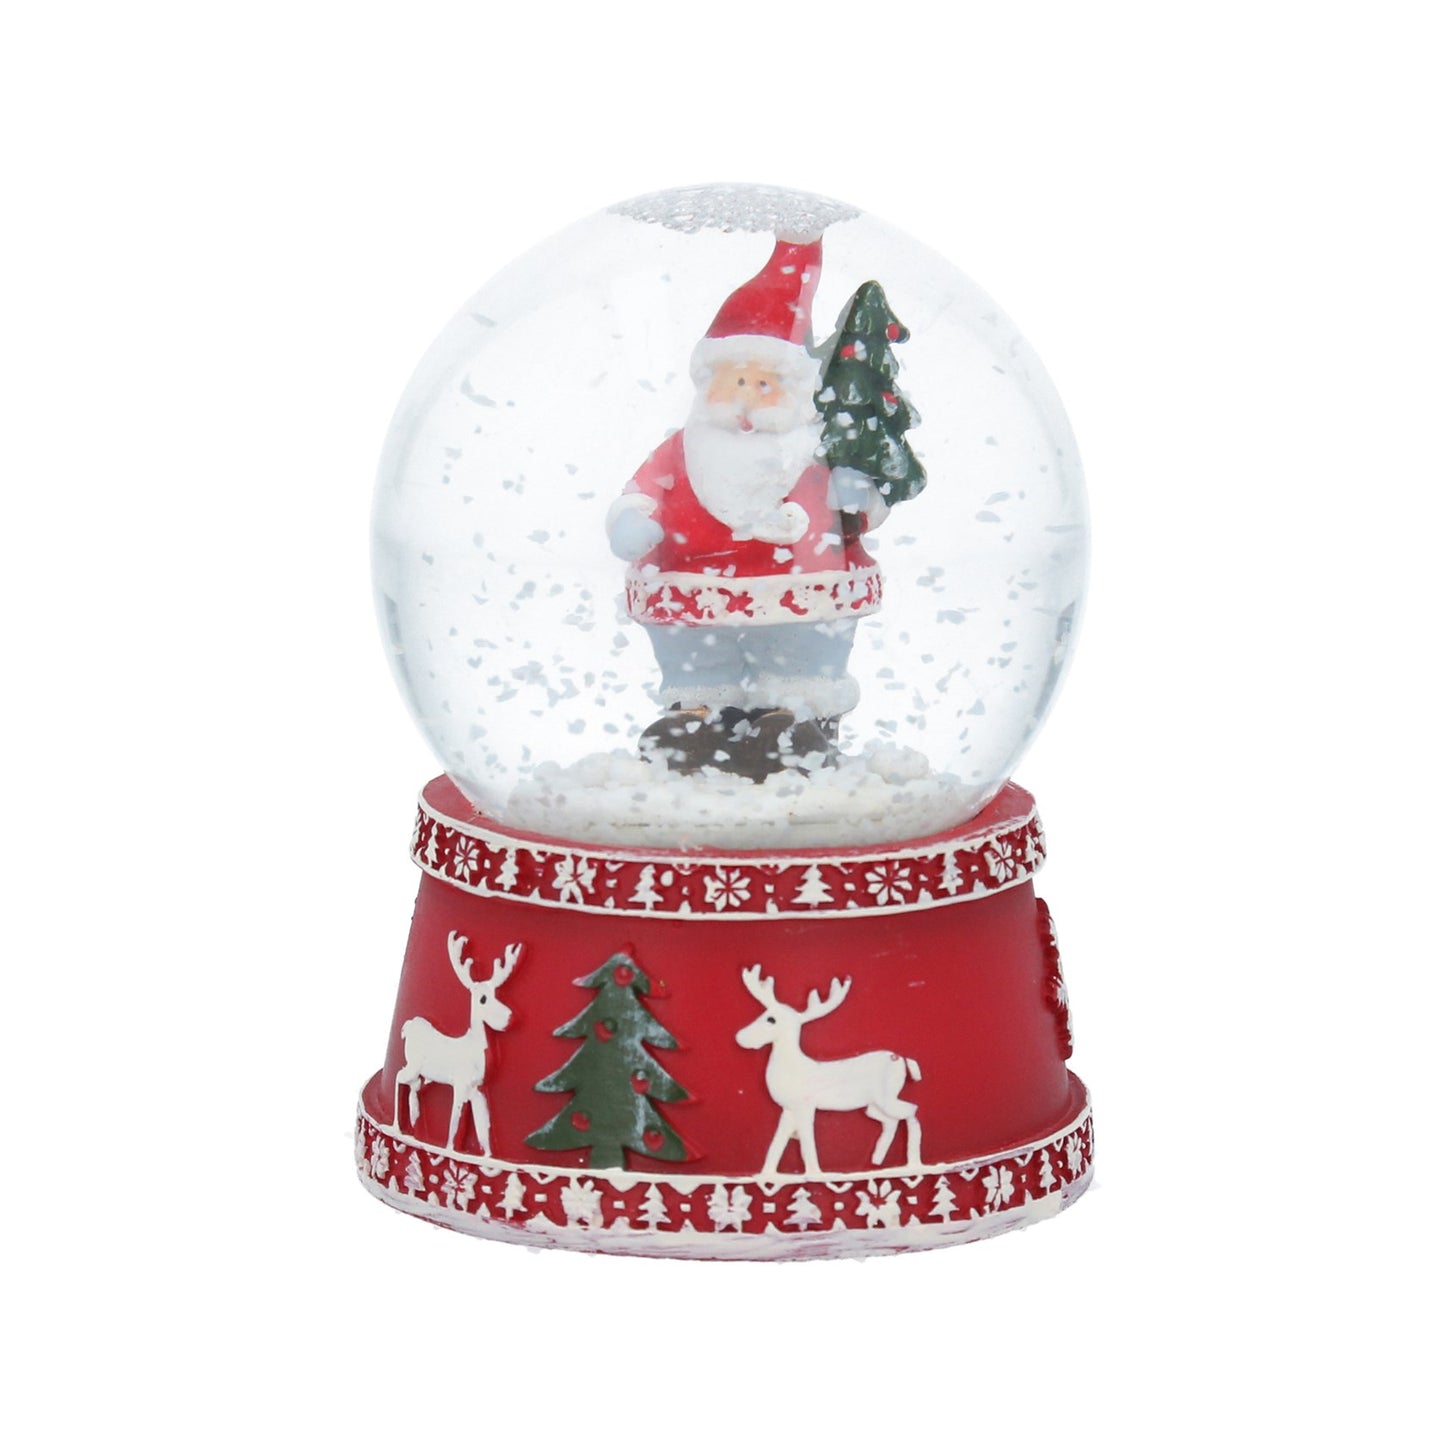 Santa Snow Globe - Christmas Ornament